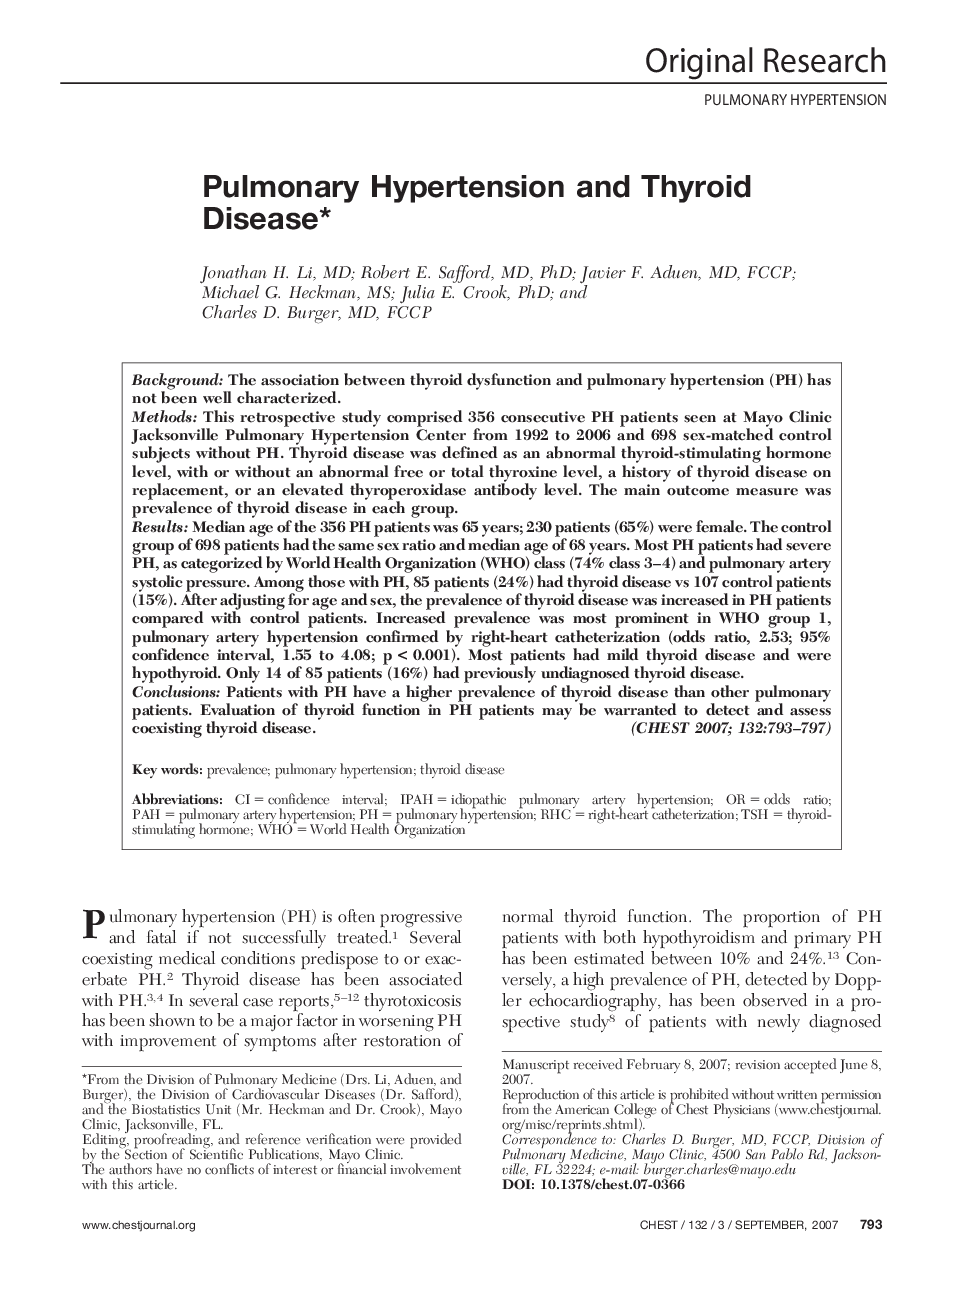 Pulmonary Hypertension and Thyroid Disease 